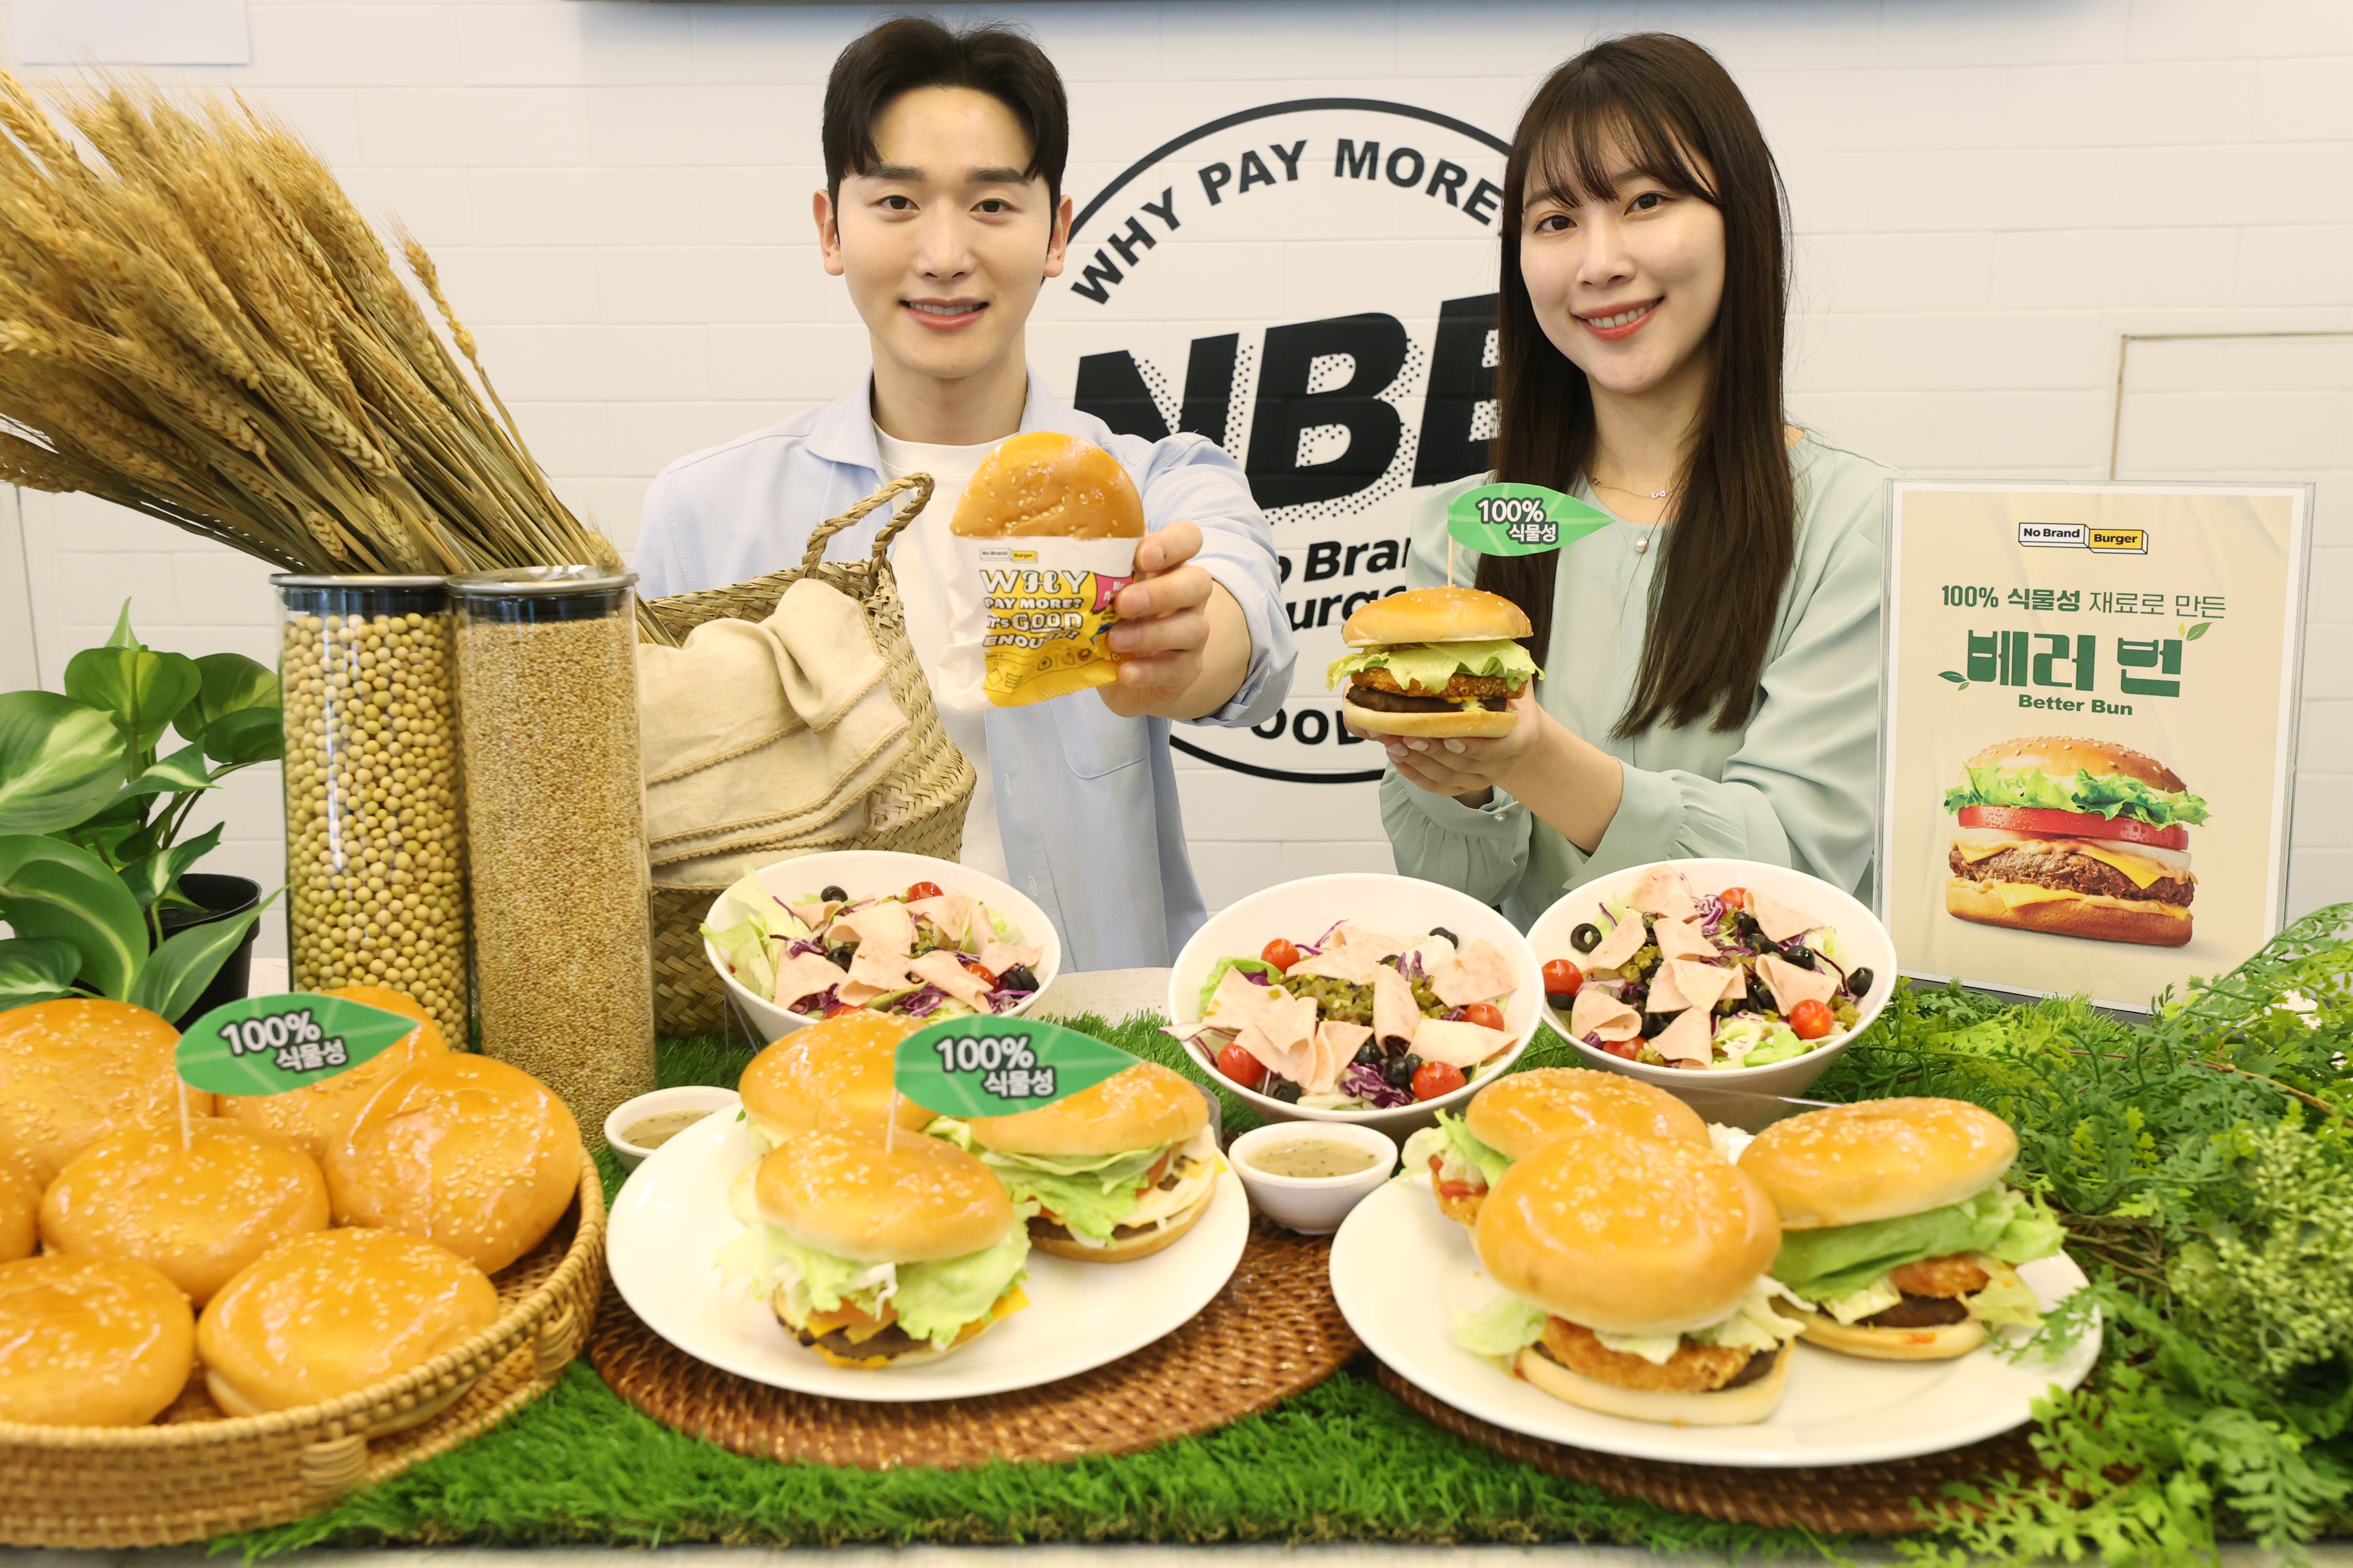 Shinsegae Food to Launch 100% Plant-Based Burger at No Brand